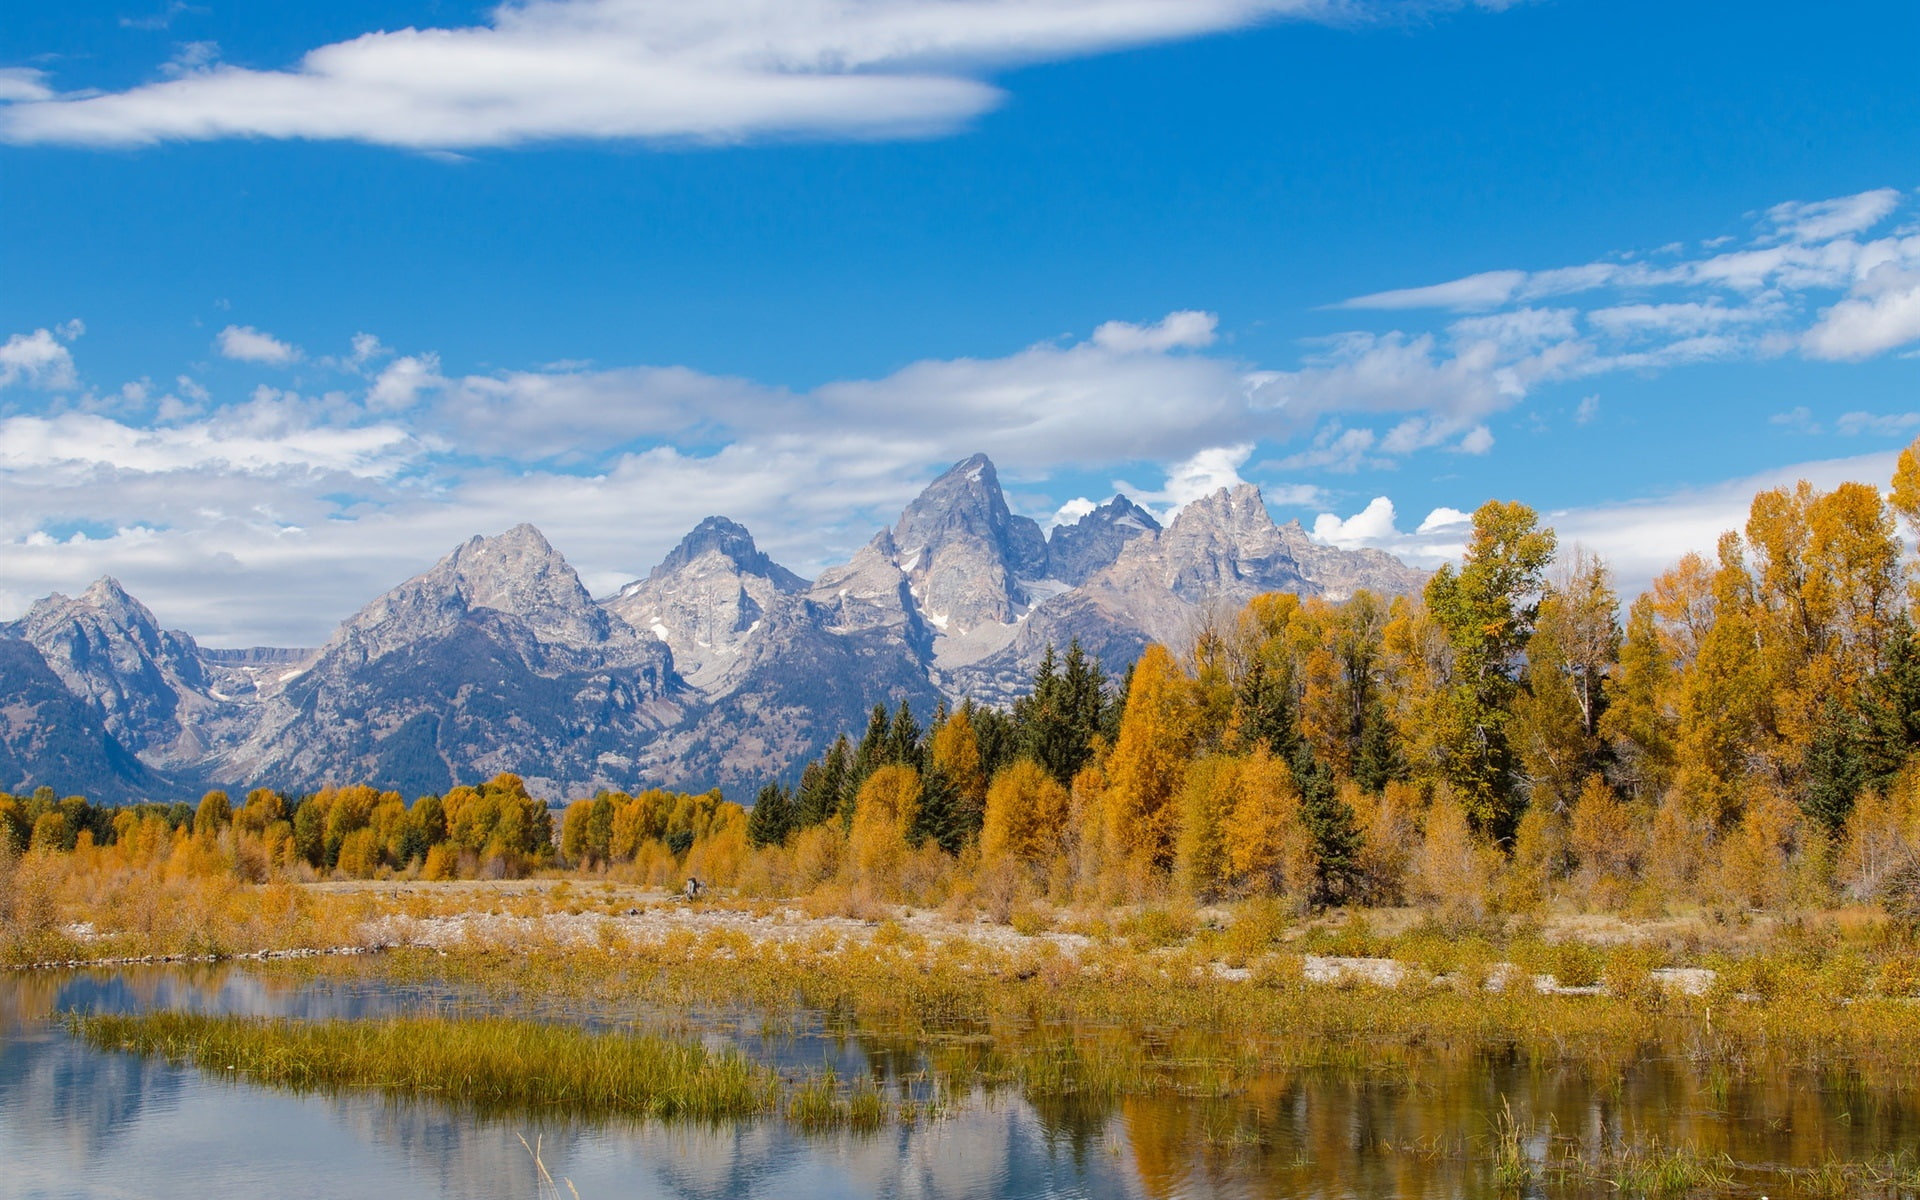 Grand Teton National Park, Wyoming, USA, mountains, river, trees, autumn, brown leafed trees